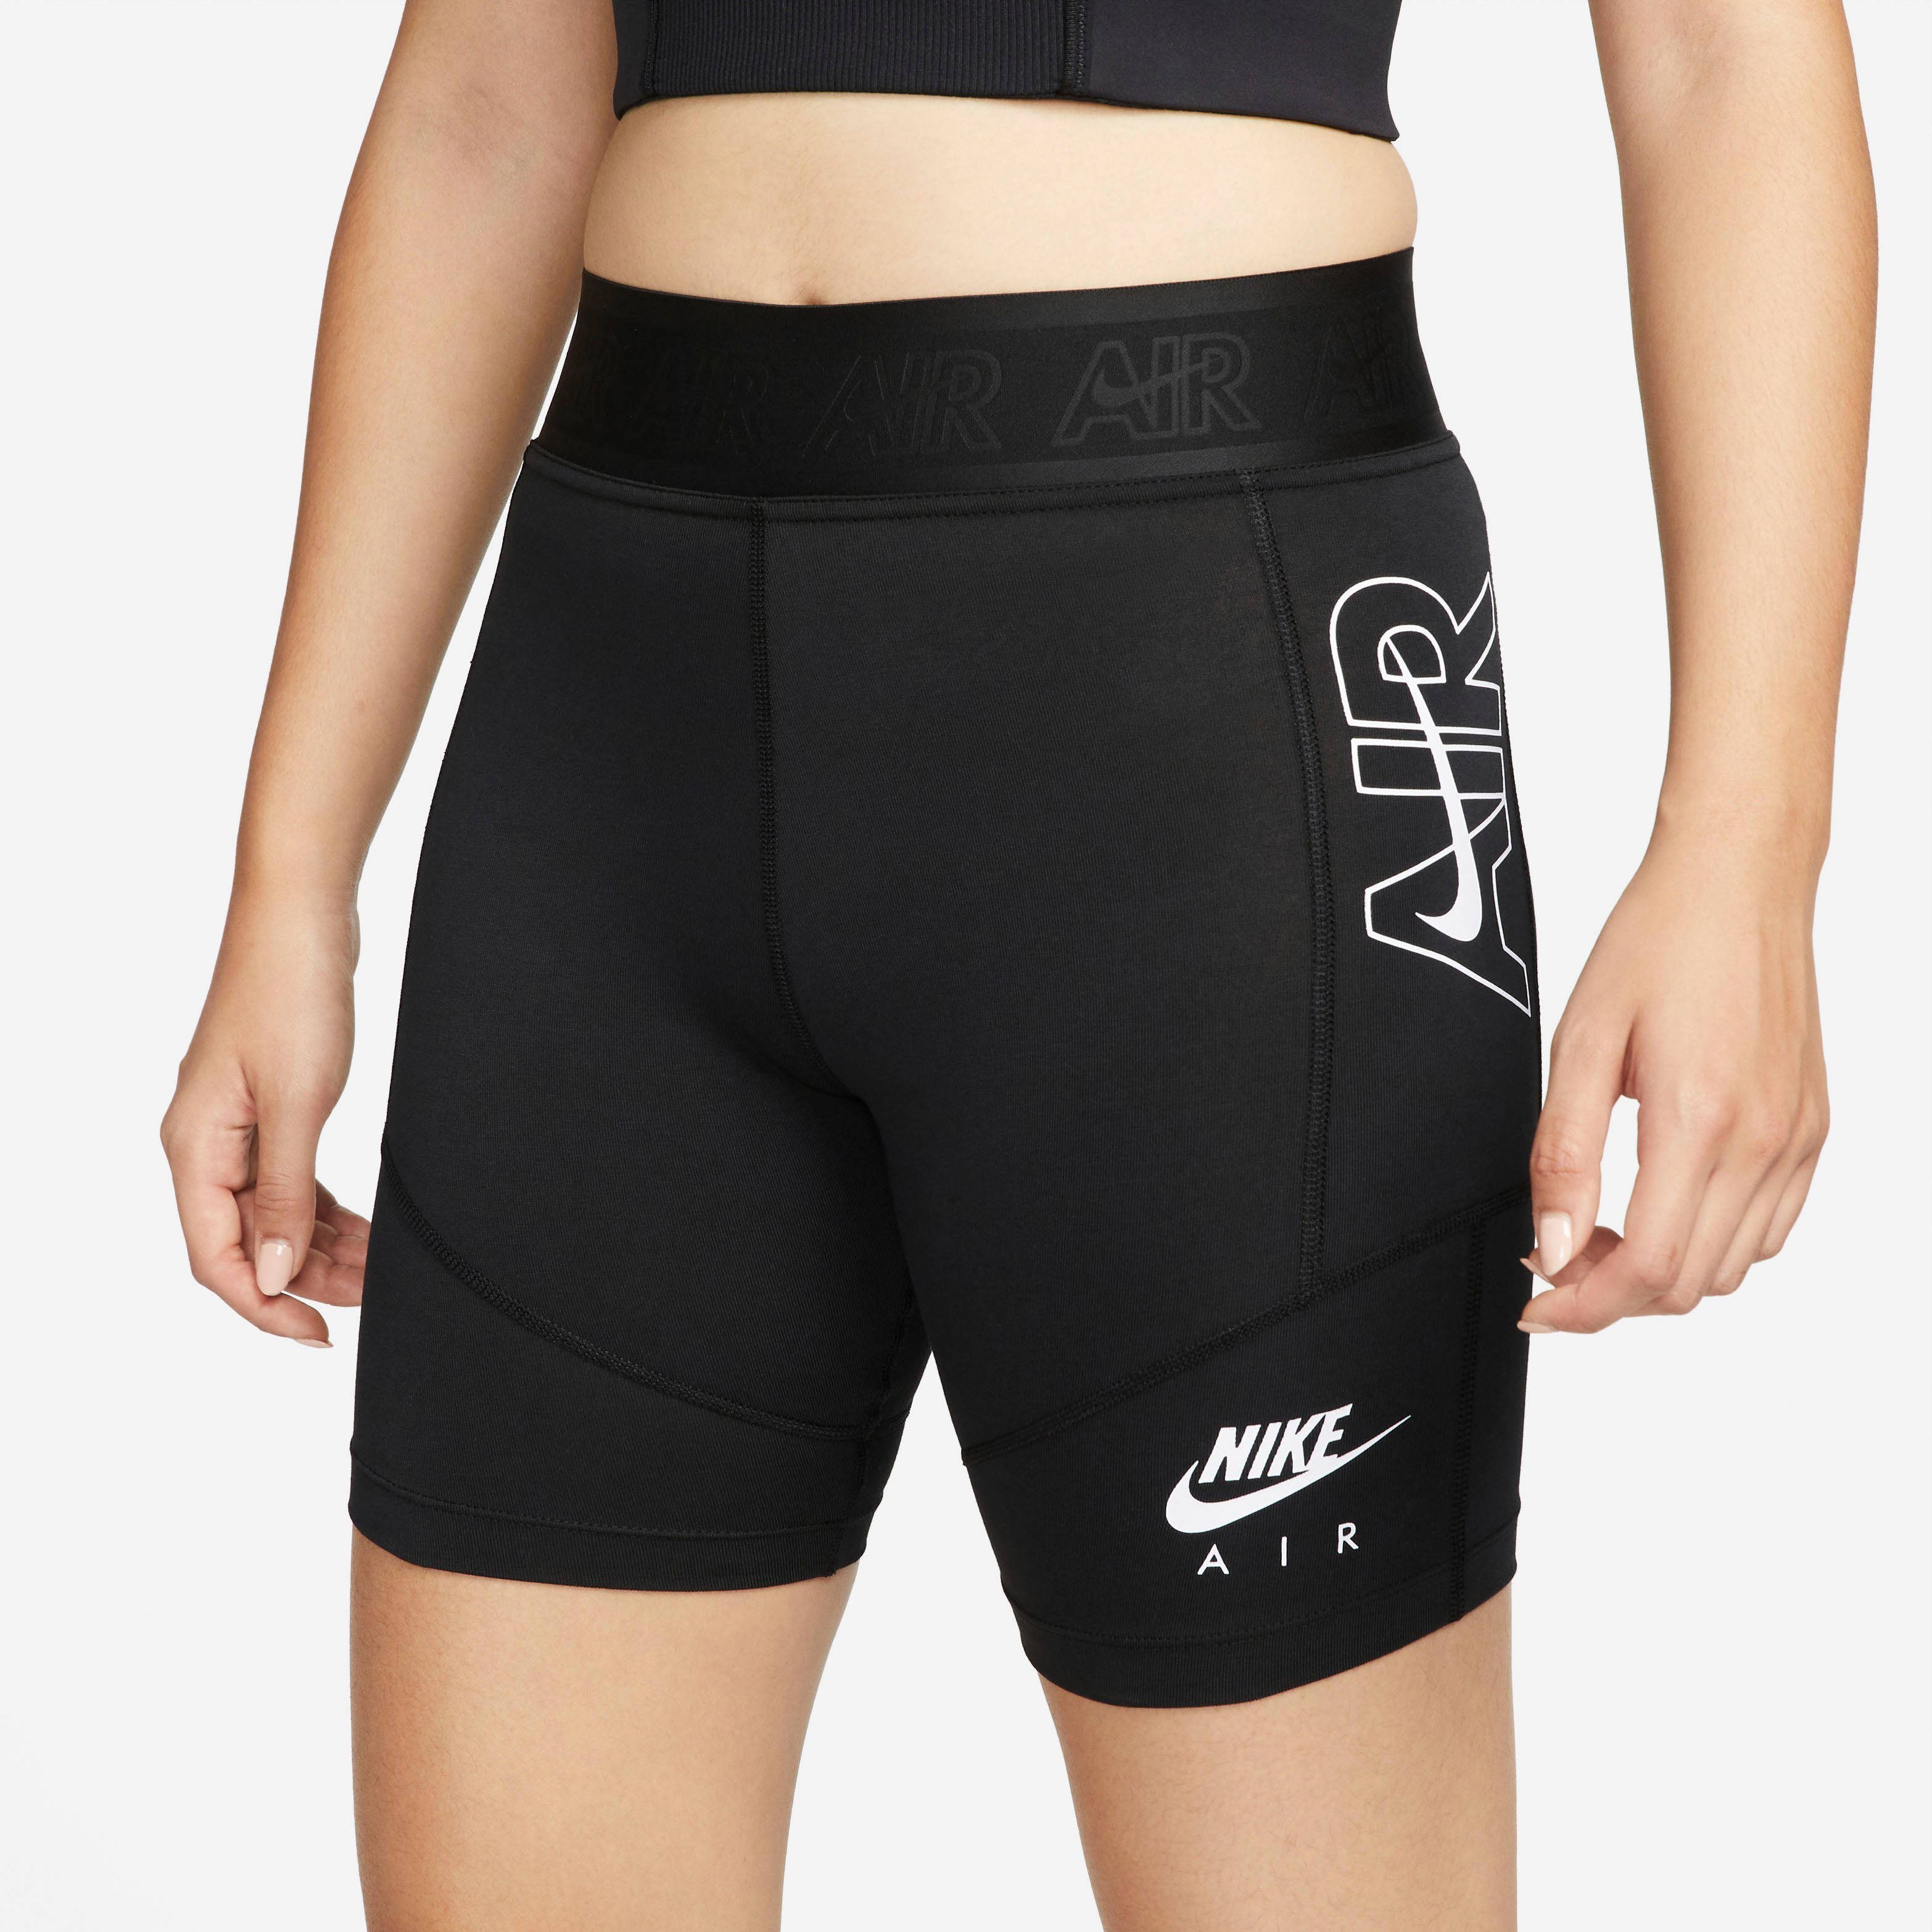 Nike Kurze Hose Damen online kaufen | OTTO